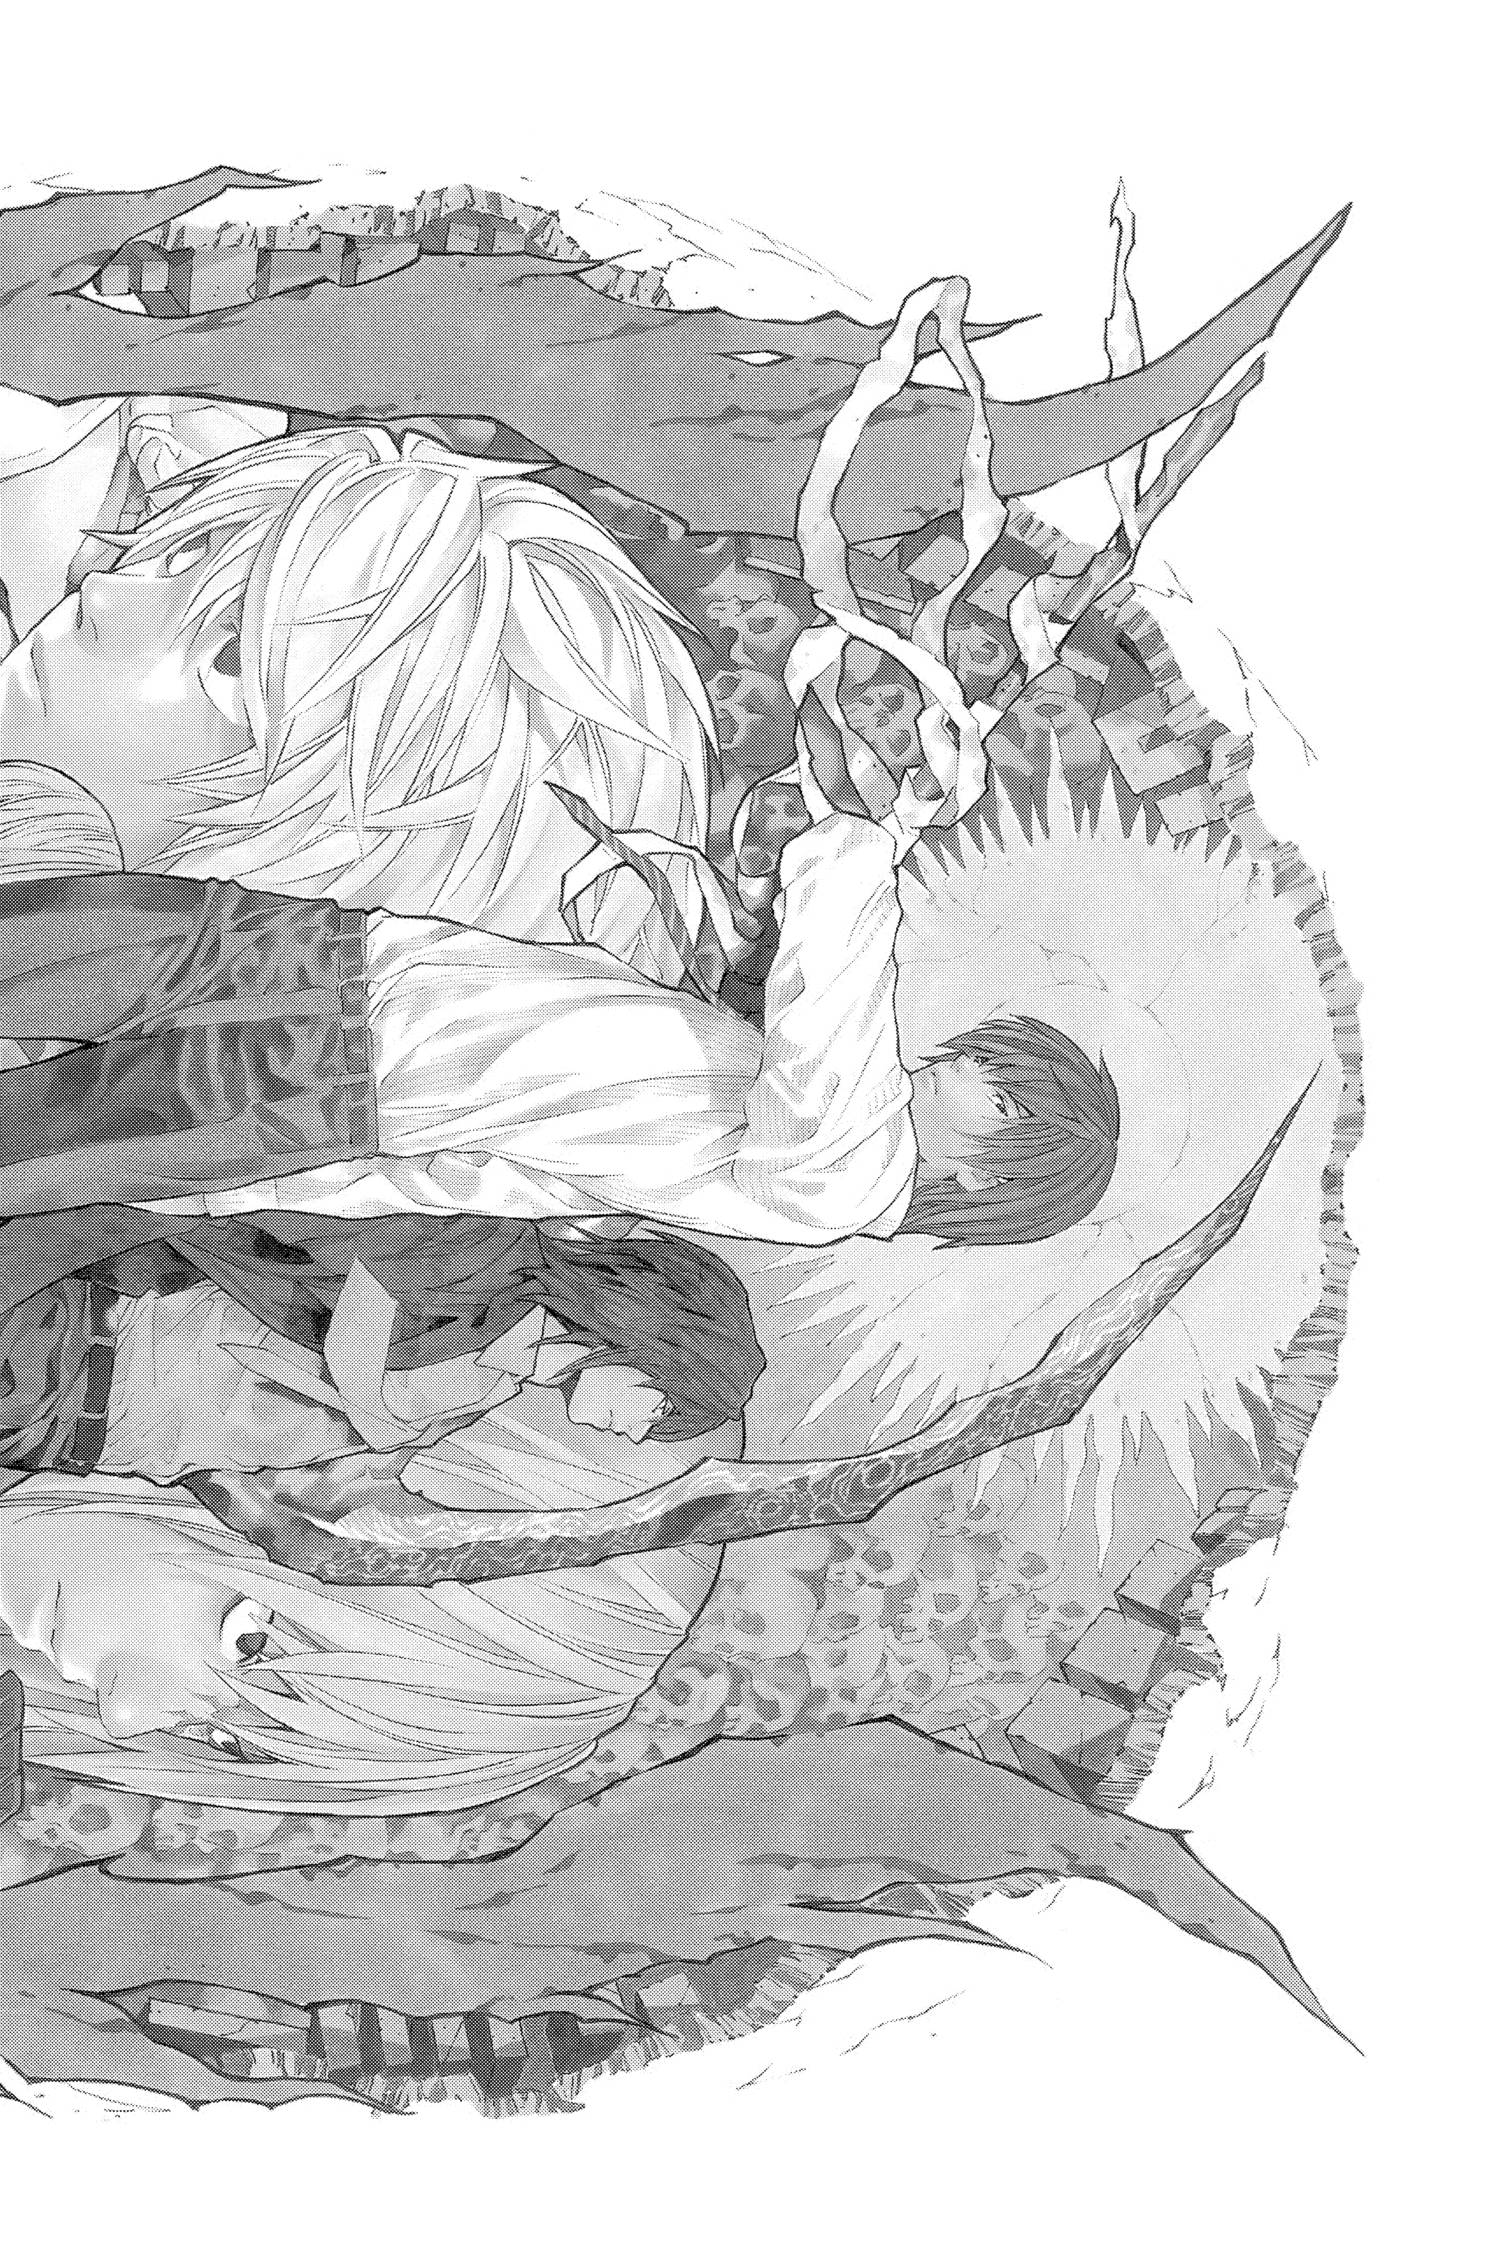 Death Note, Vol. 11: Kindred Spirits by Tsugumi Ohba